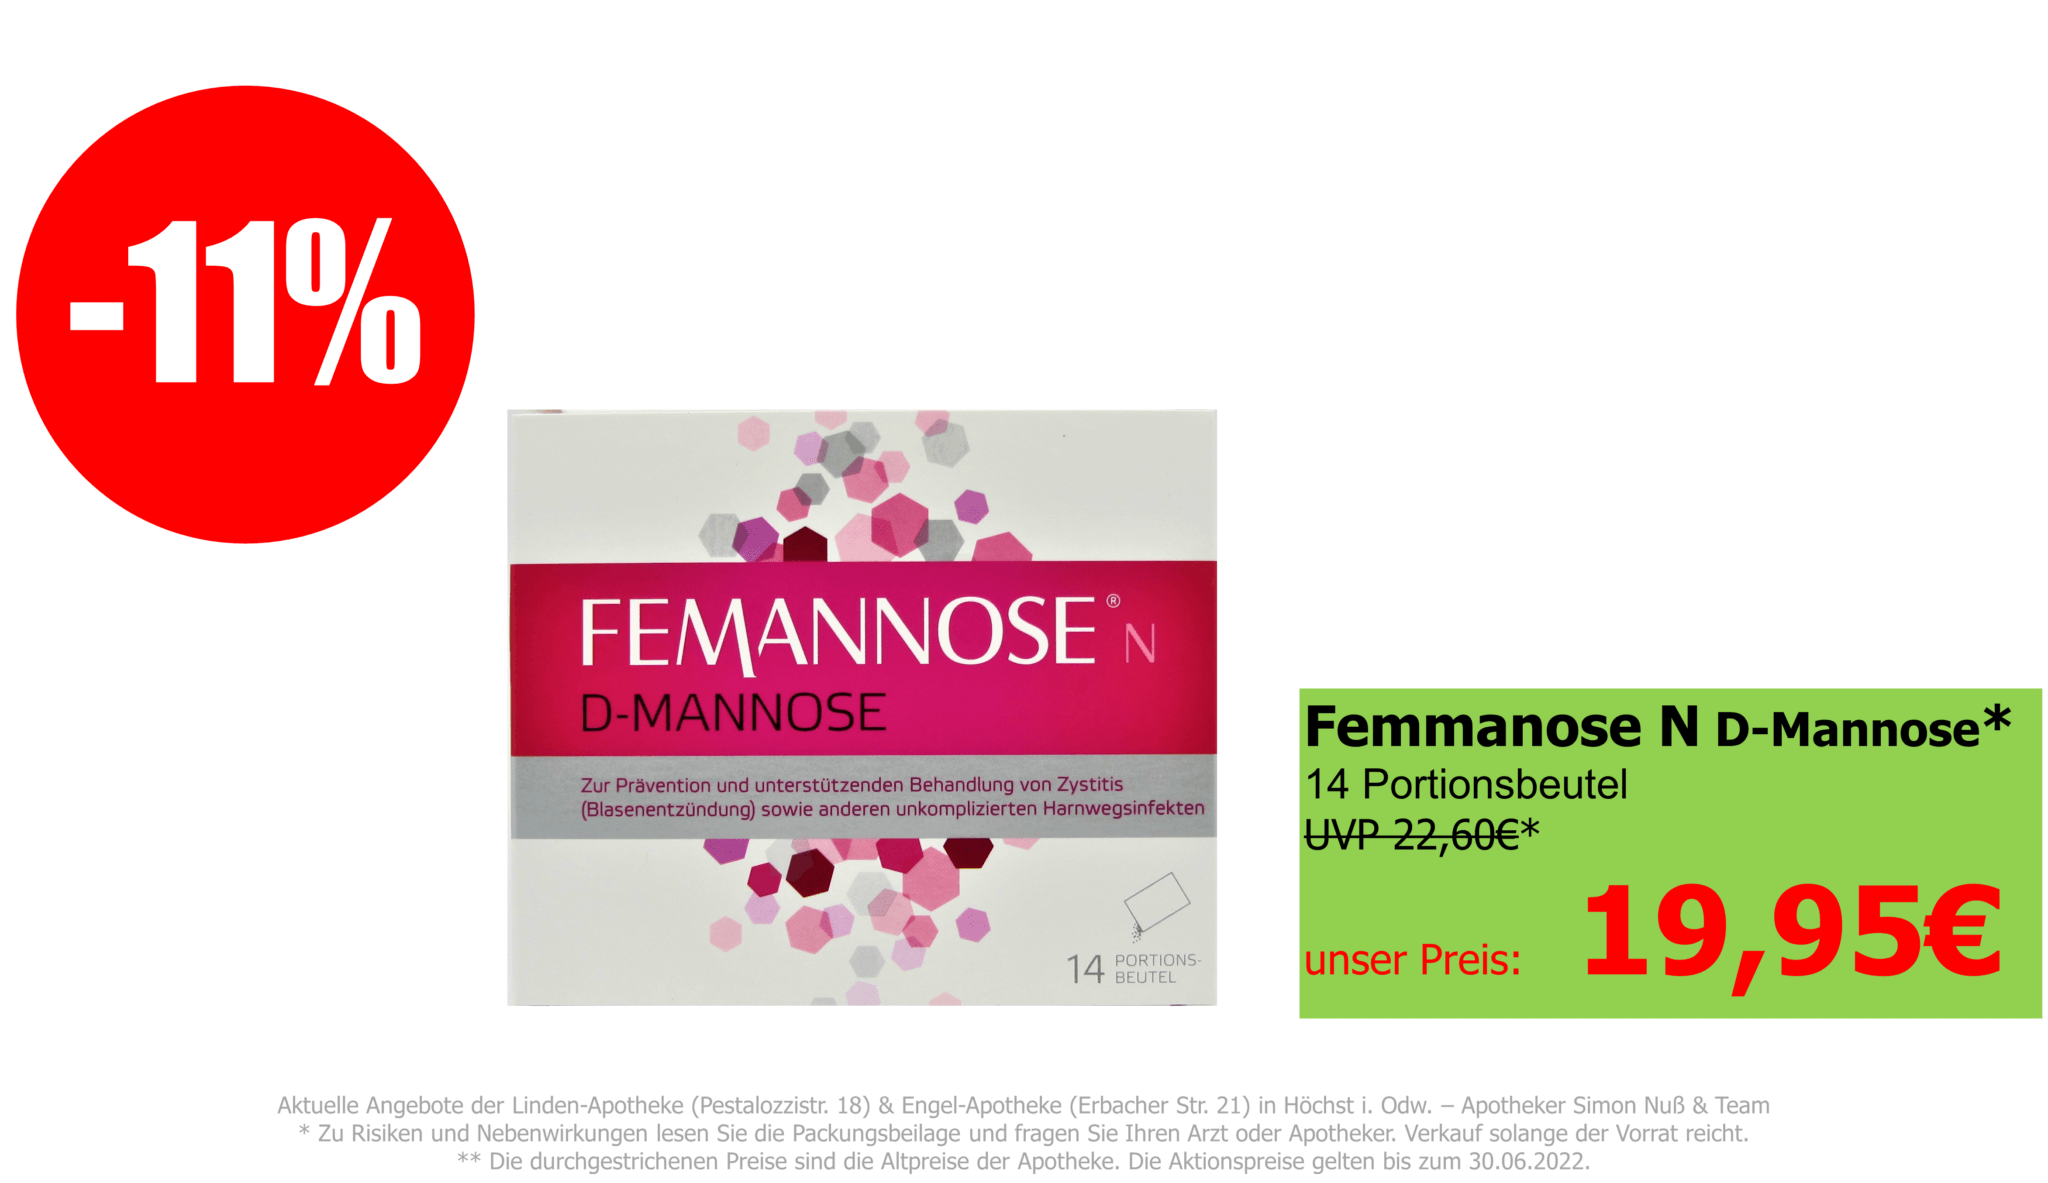 Femmanose N D-Mannose